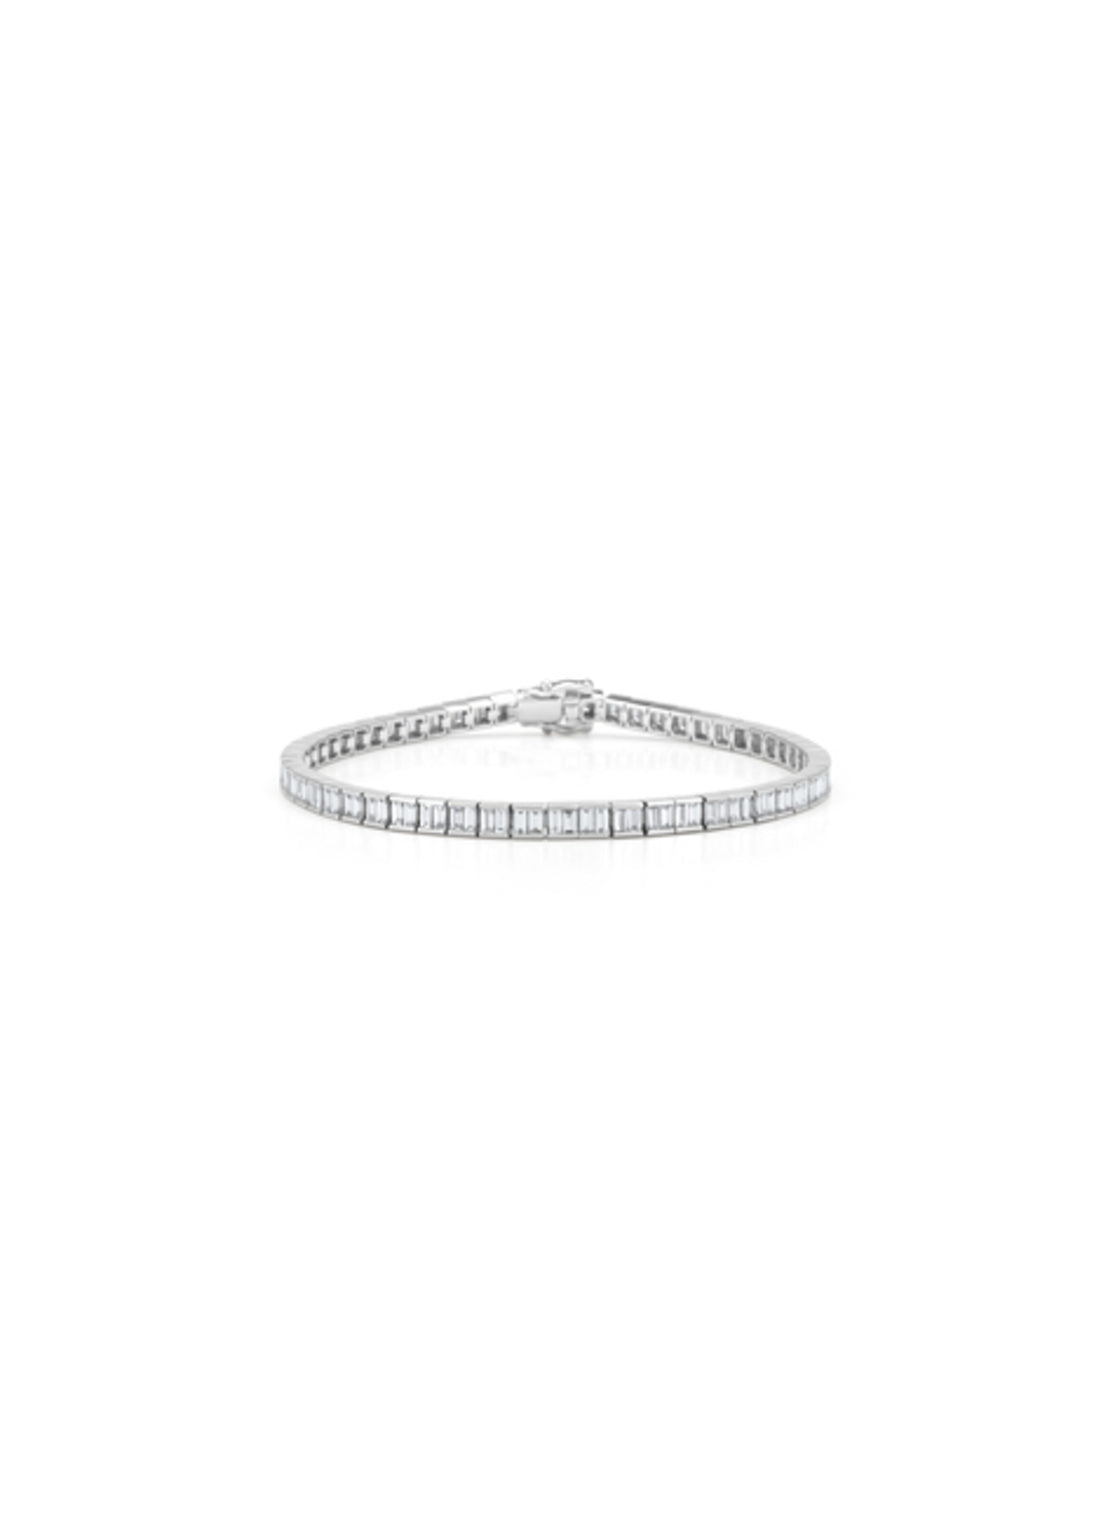 White gold bracelet, 3.31 CT Diamant, Tennis Bracelet